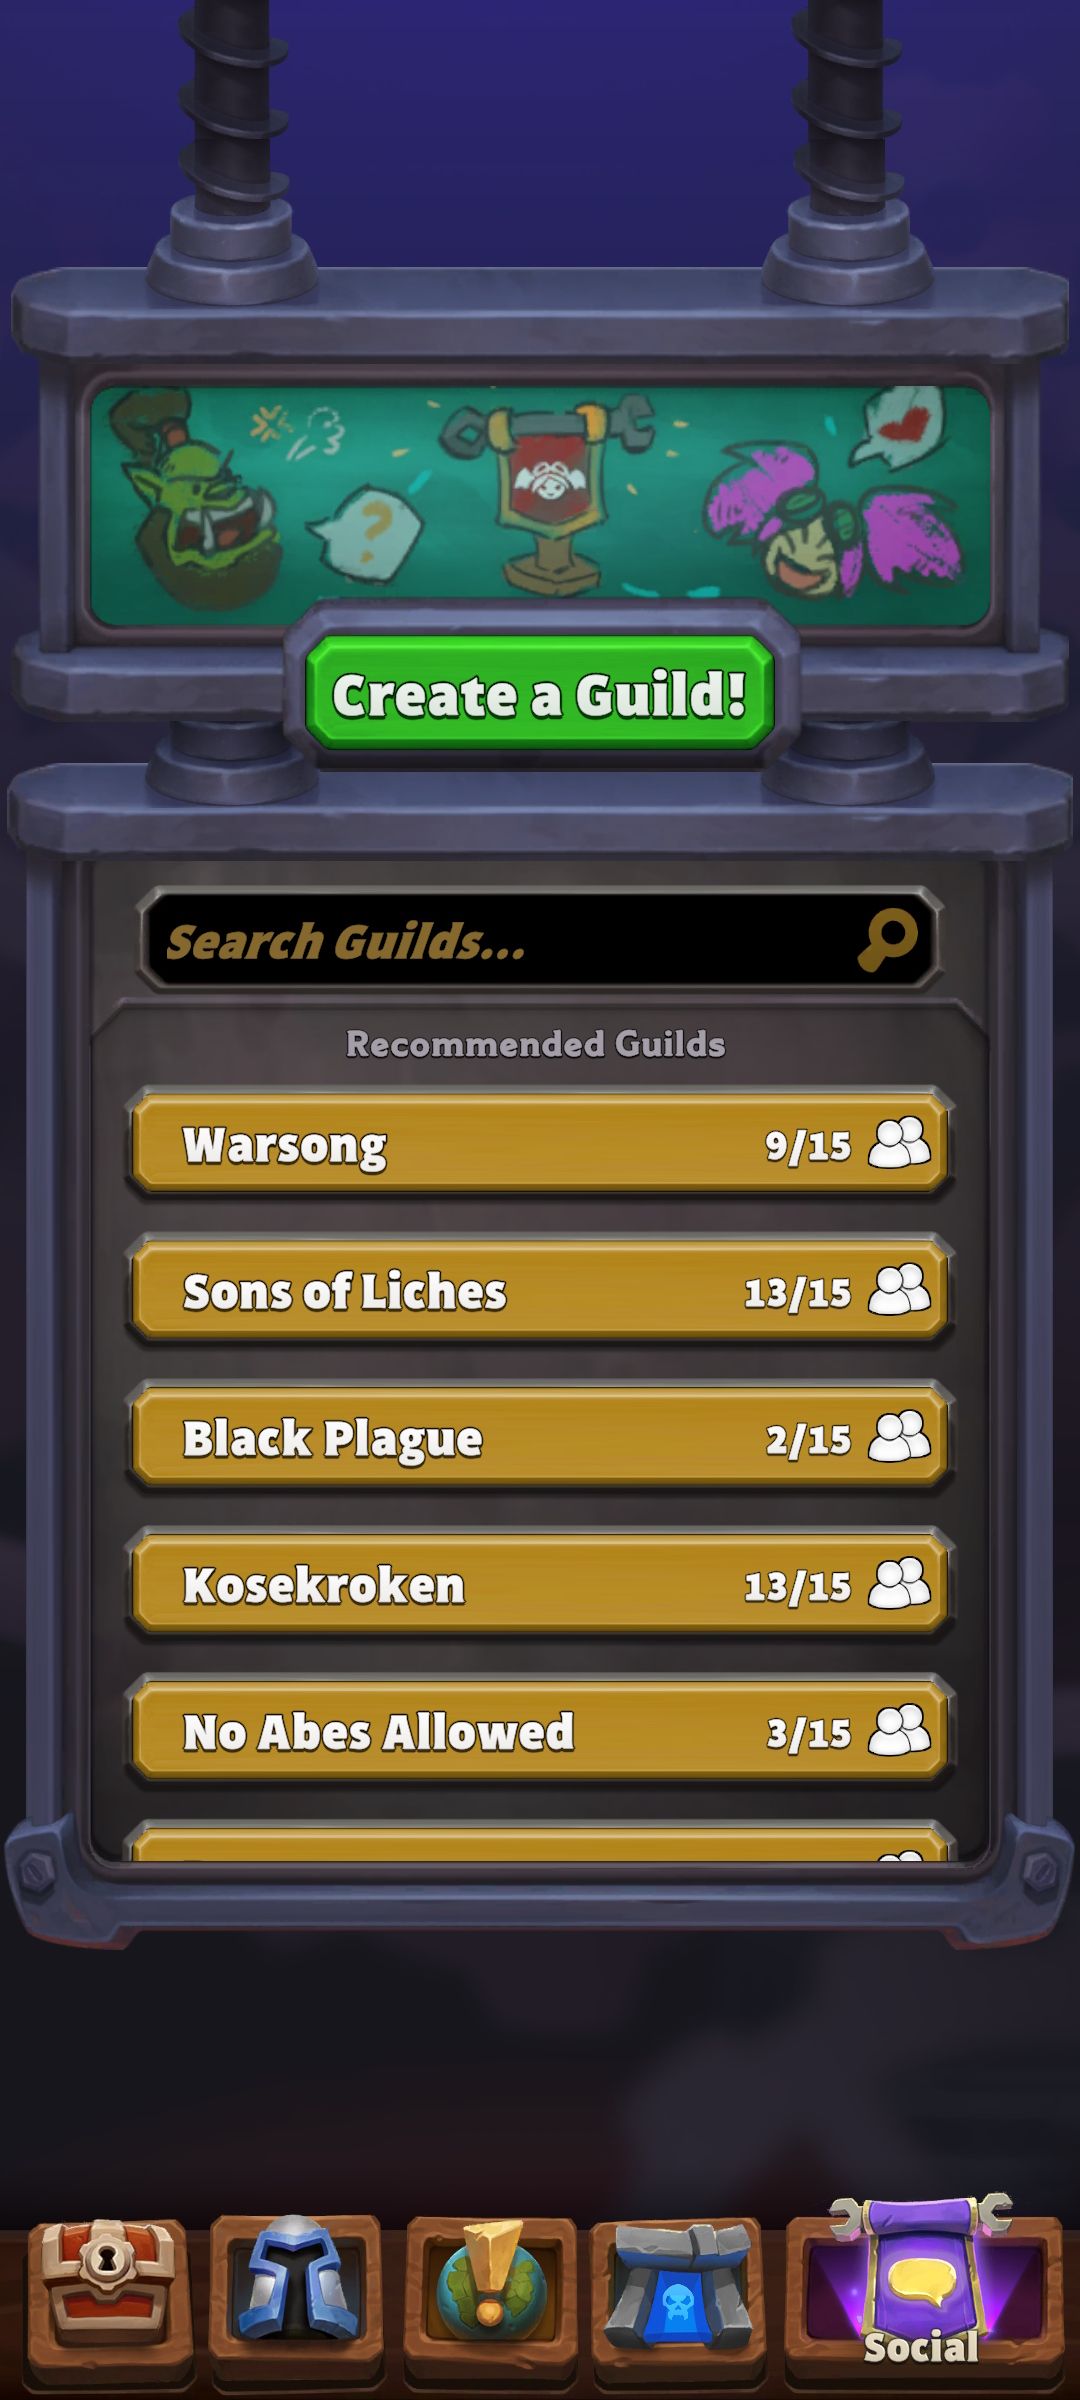 Warcraft guild overview screen under social